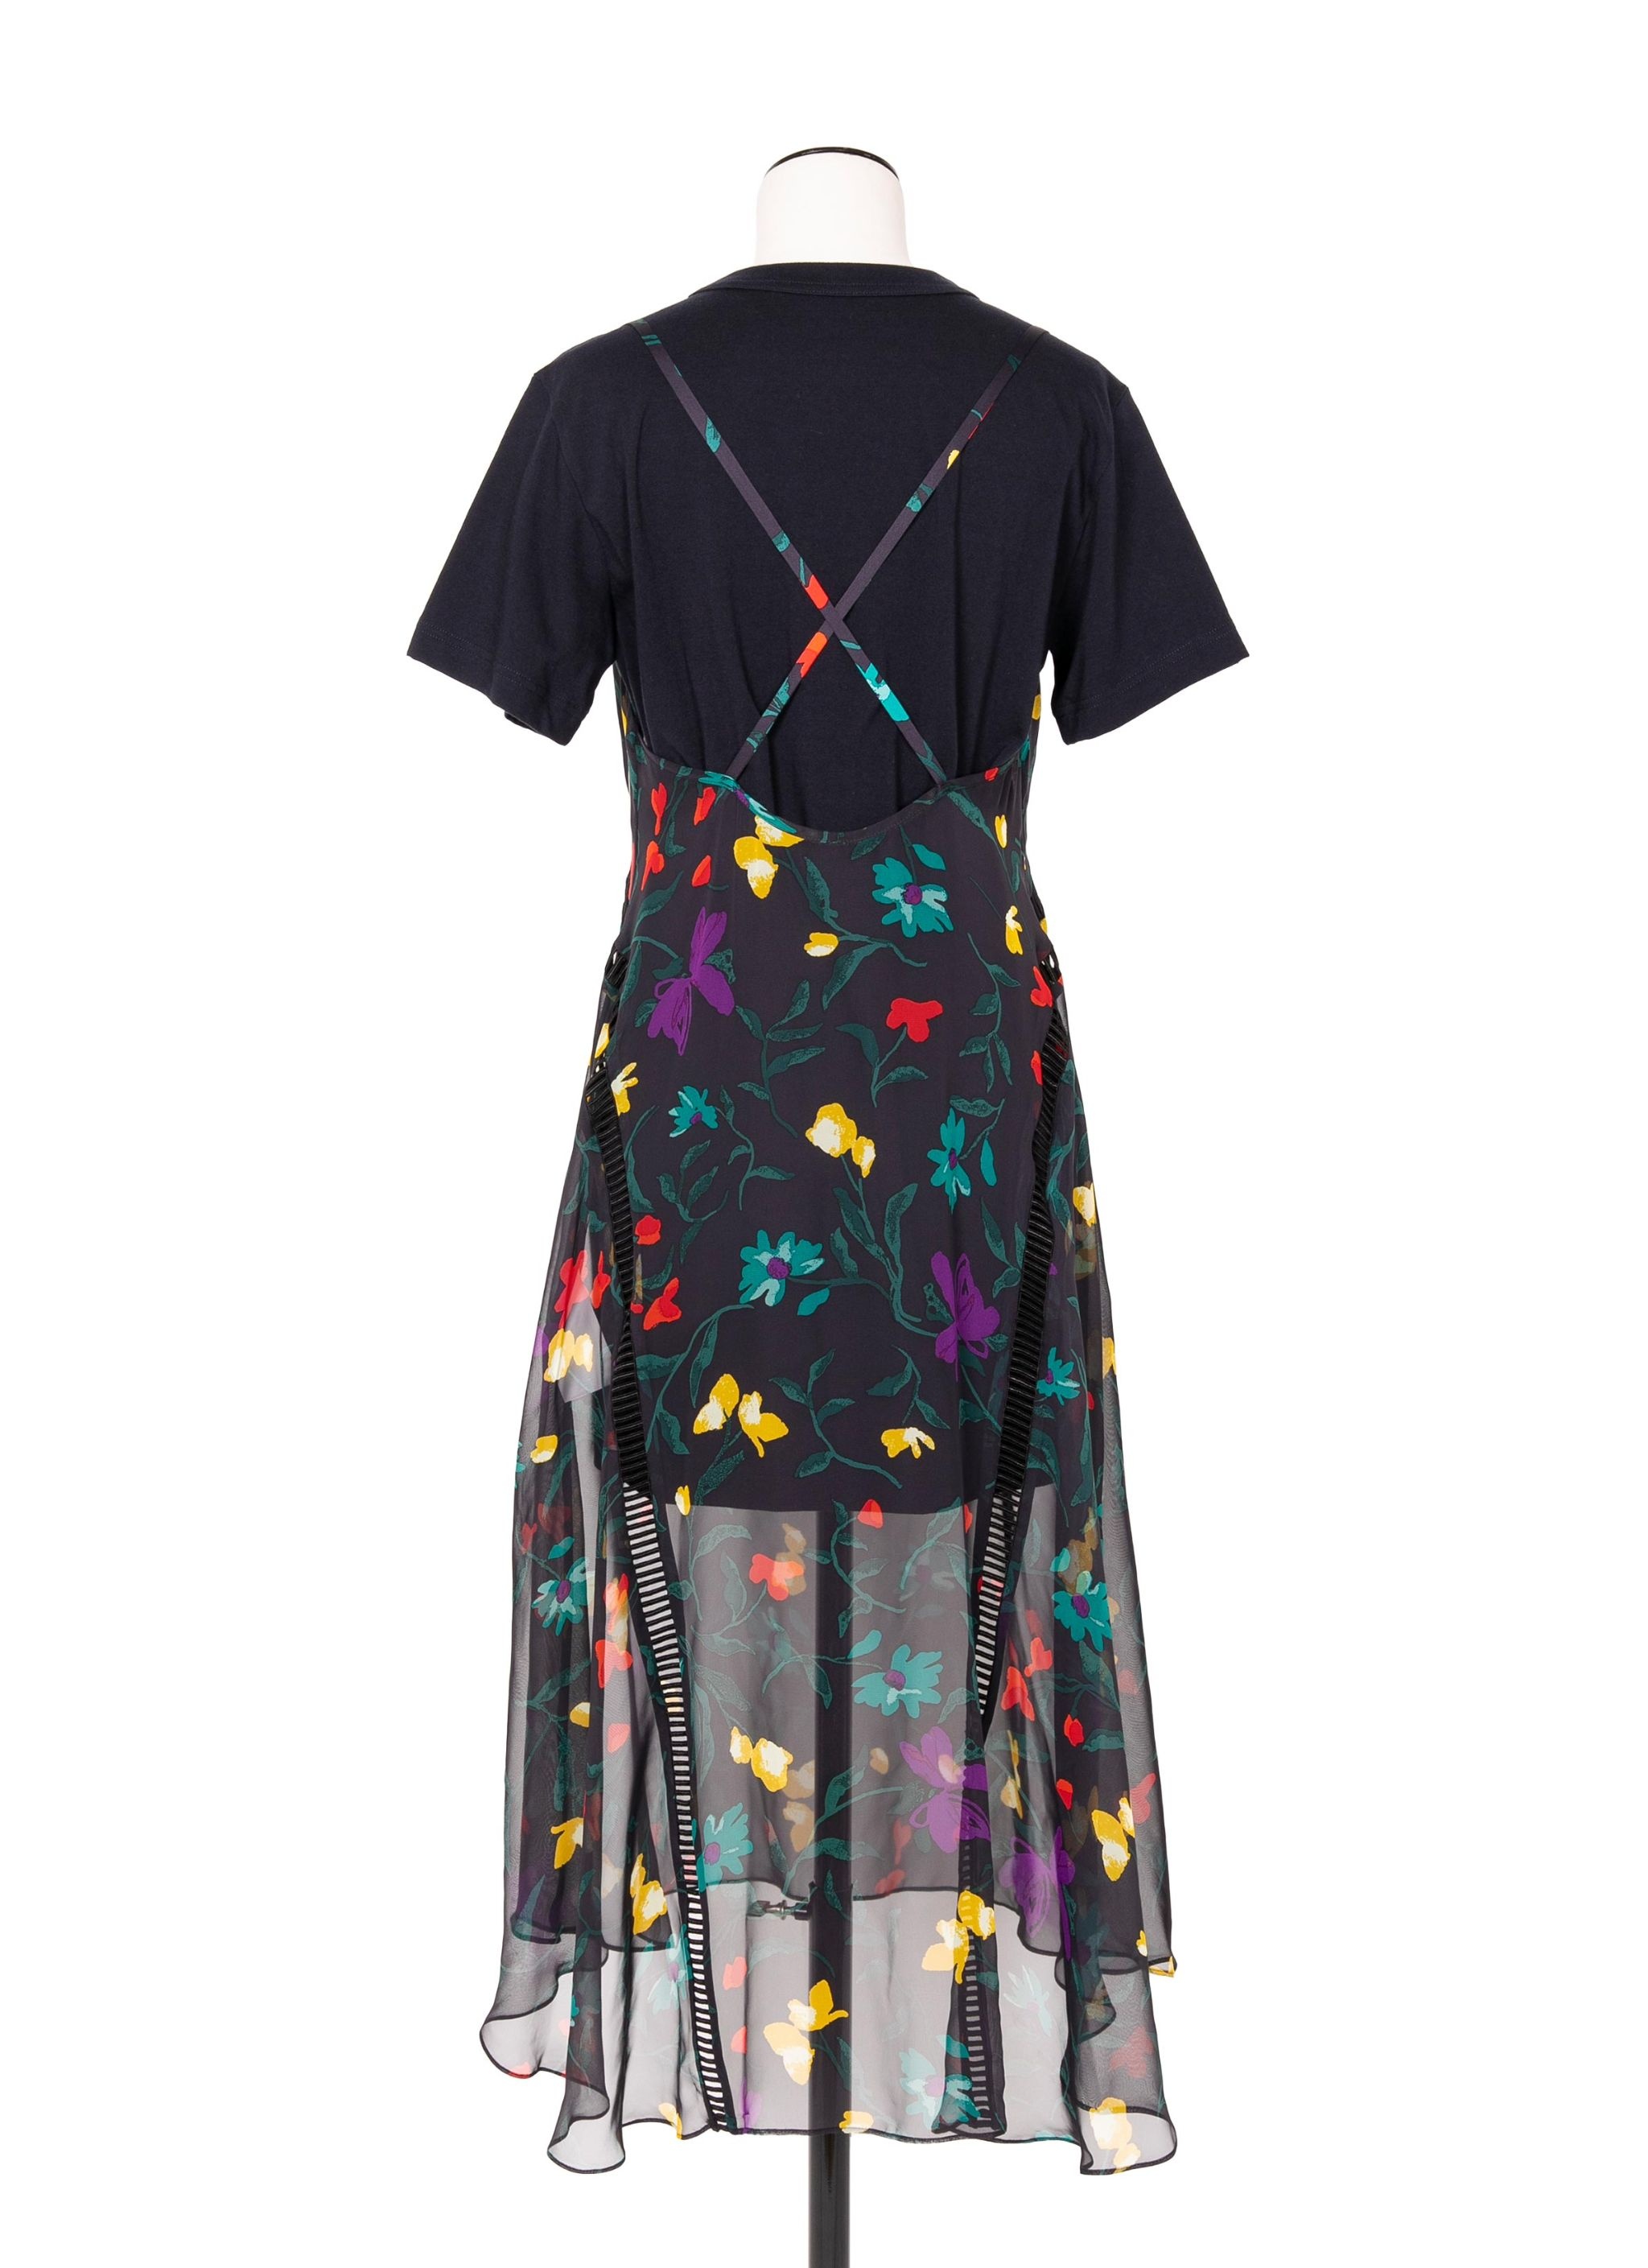 Floral Print Cotton Jersey Dress - 4